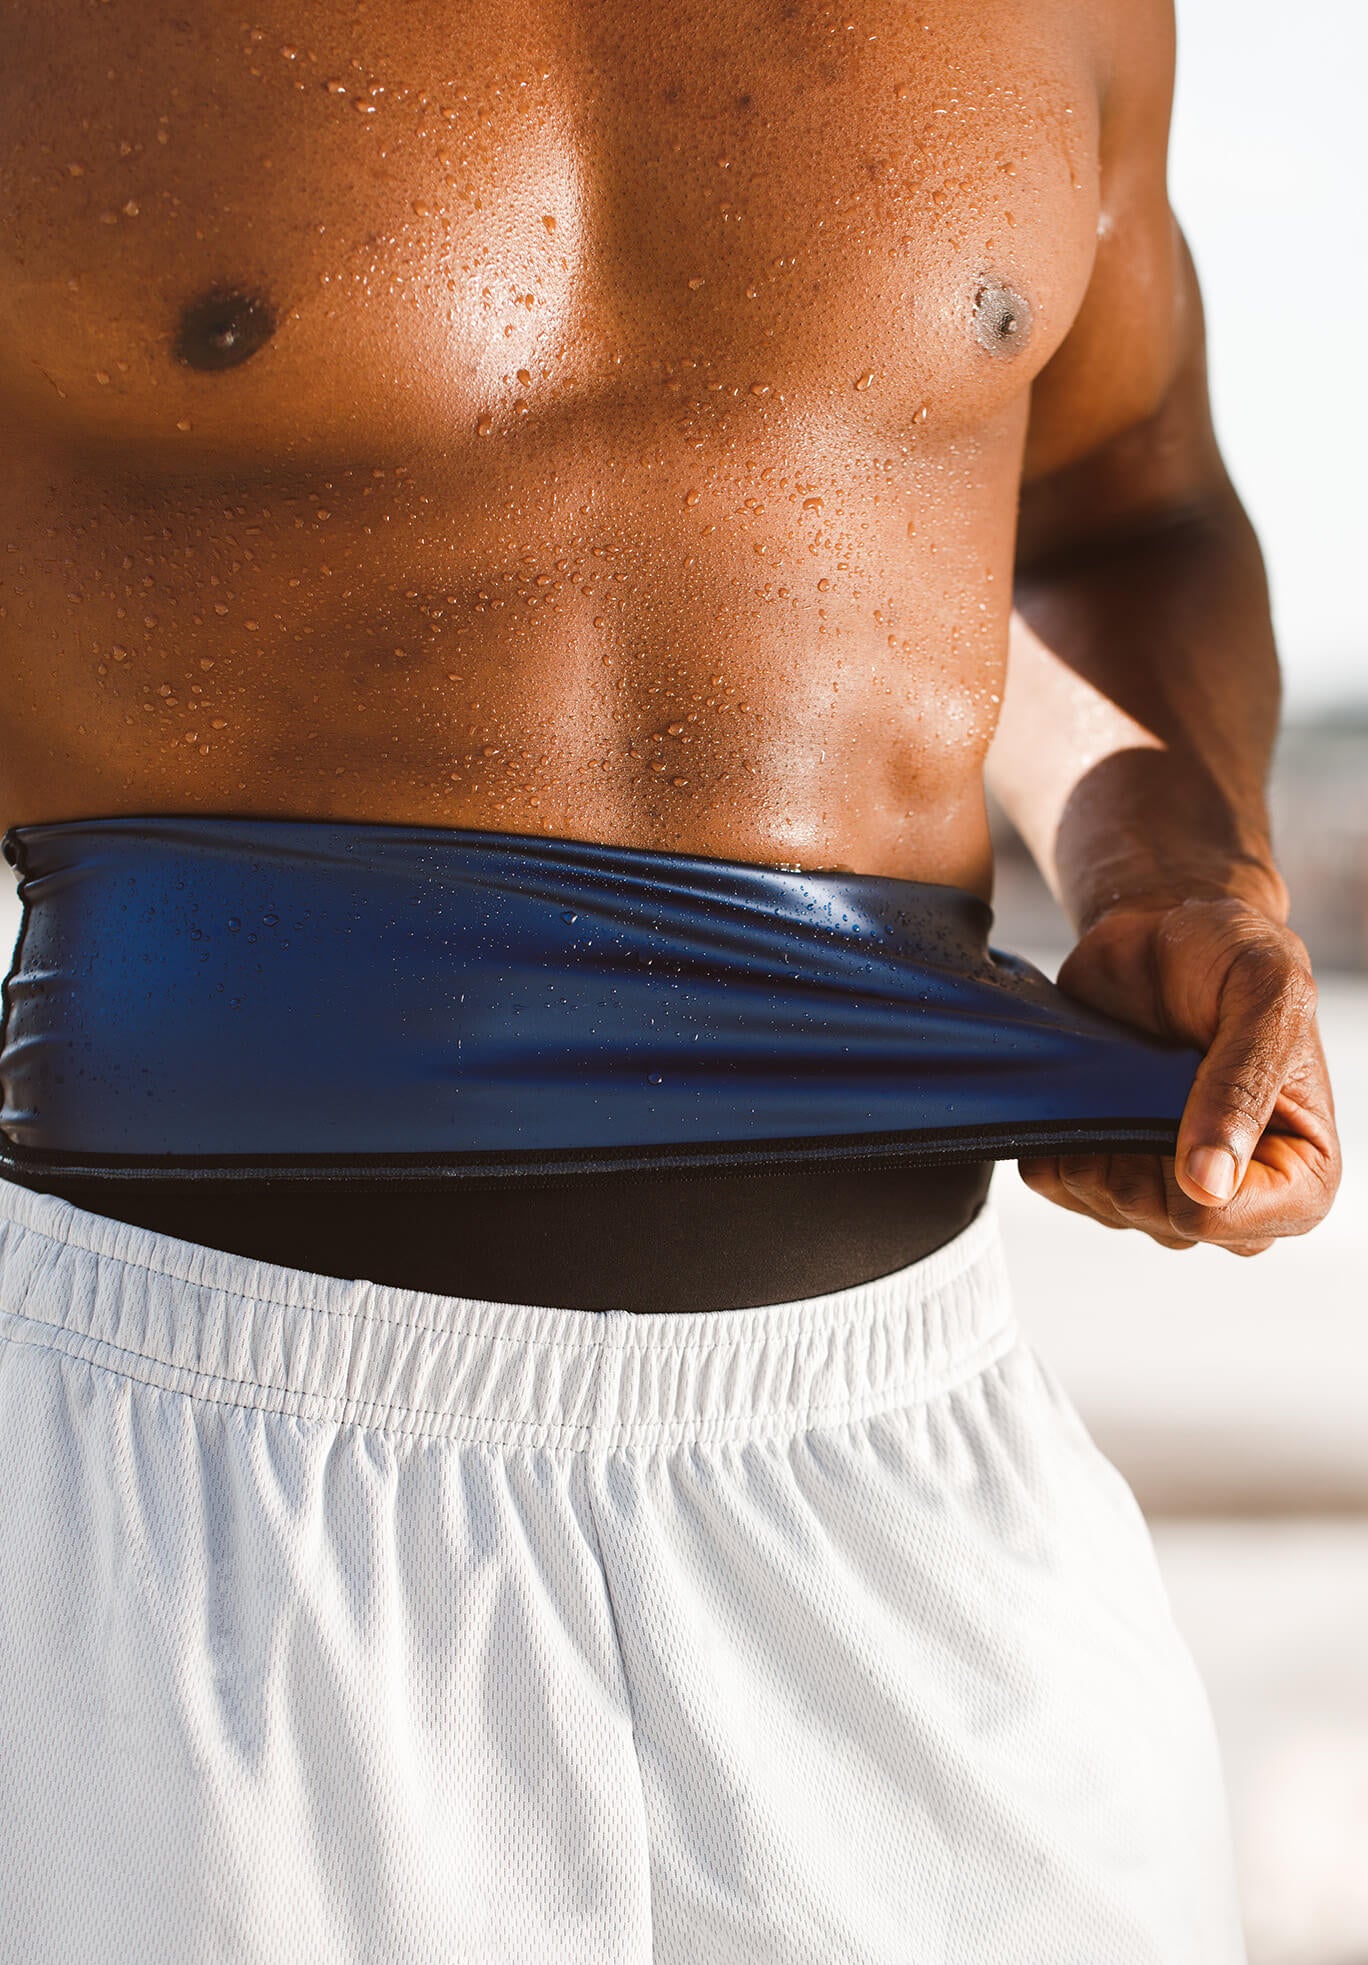 Bestsellers Sweat Belt, Weight Loss Ab Belt For Men Women Workout